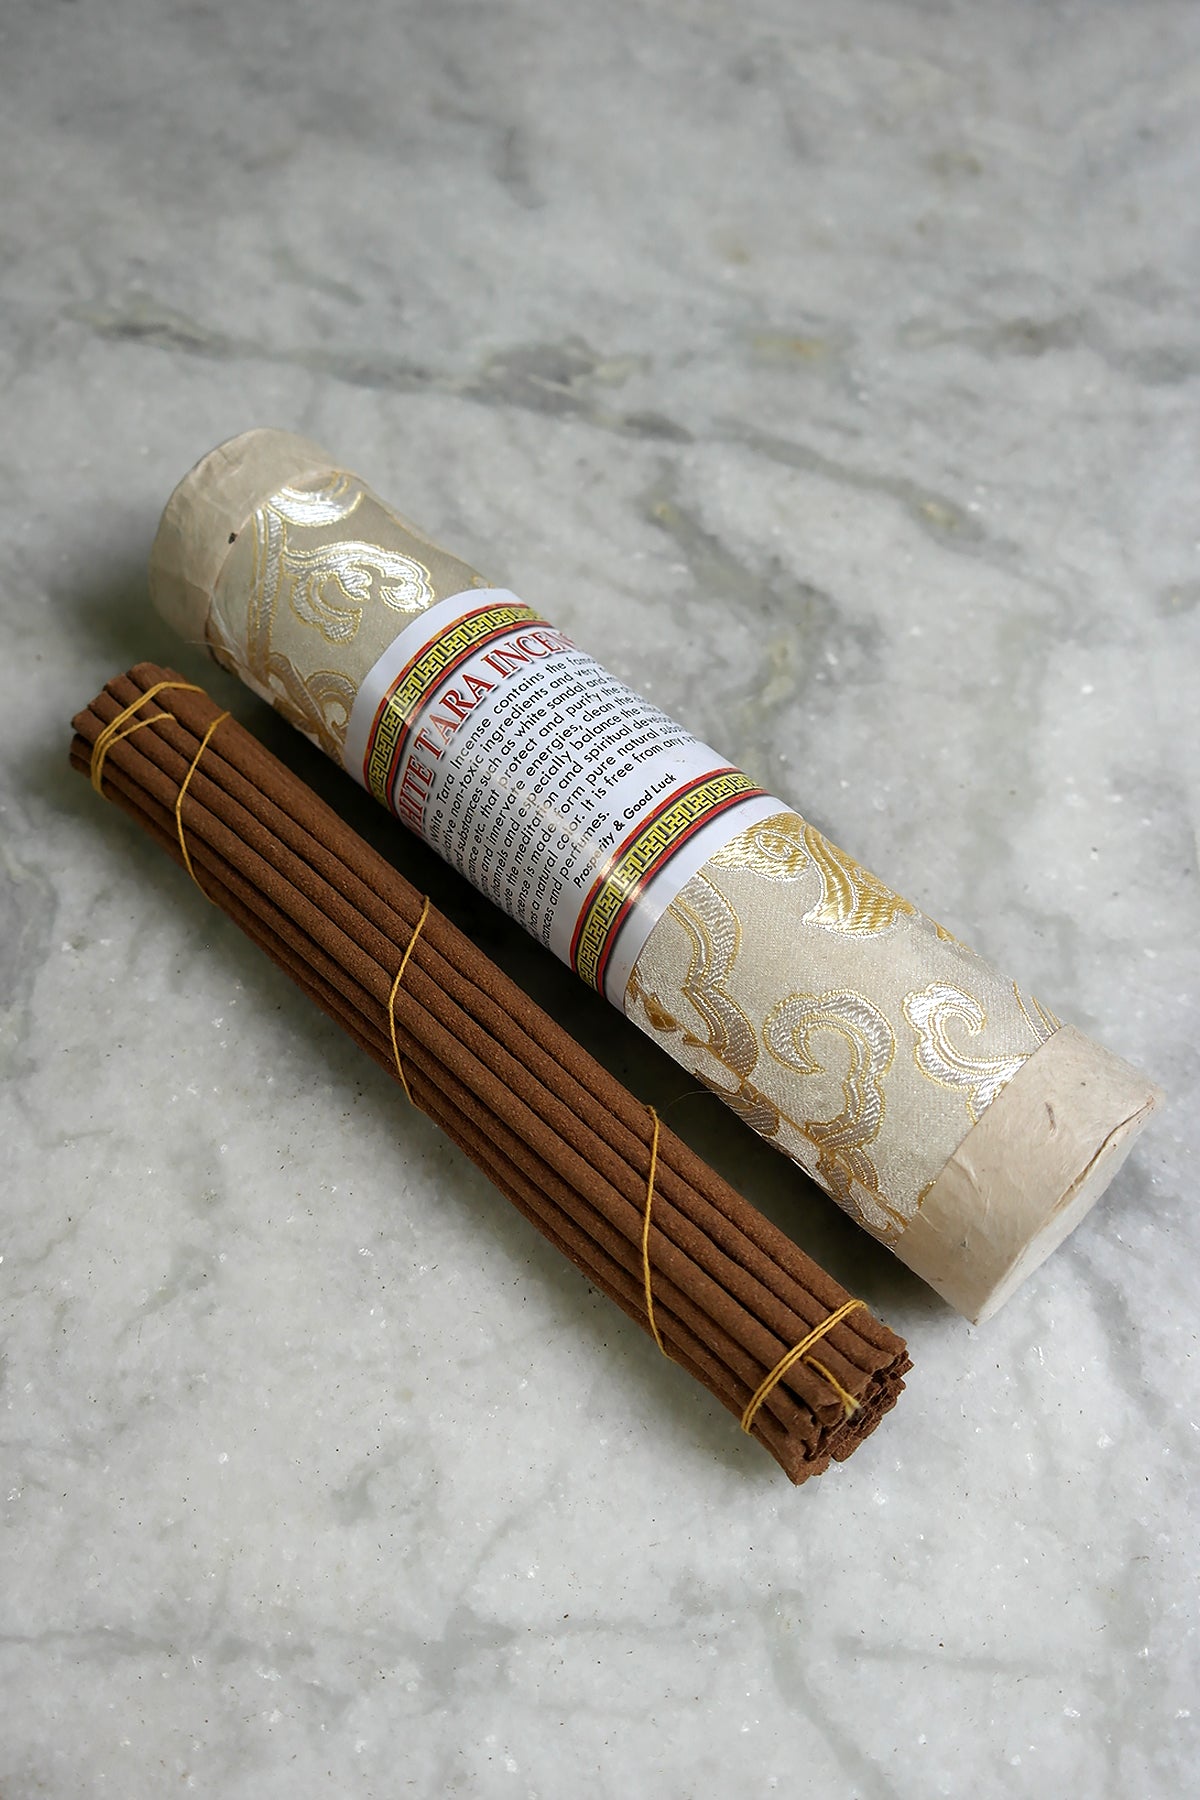 White Tara Incense in brocade pack